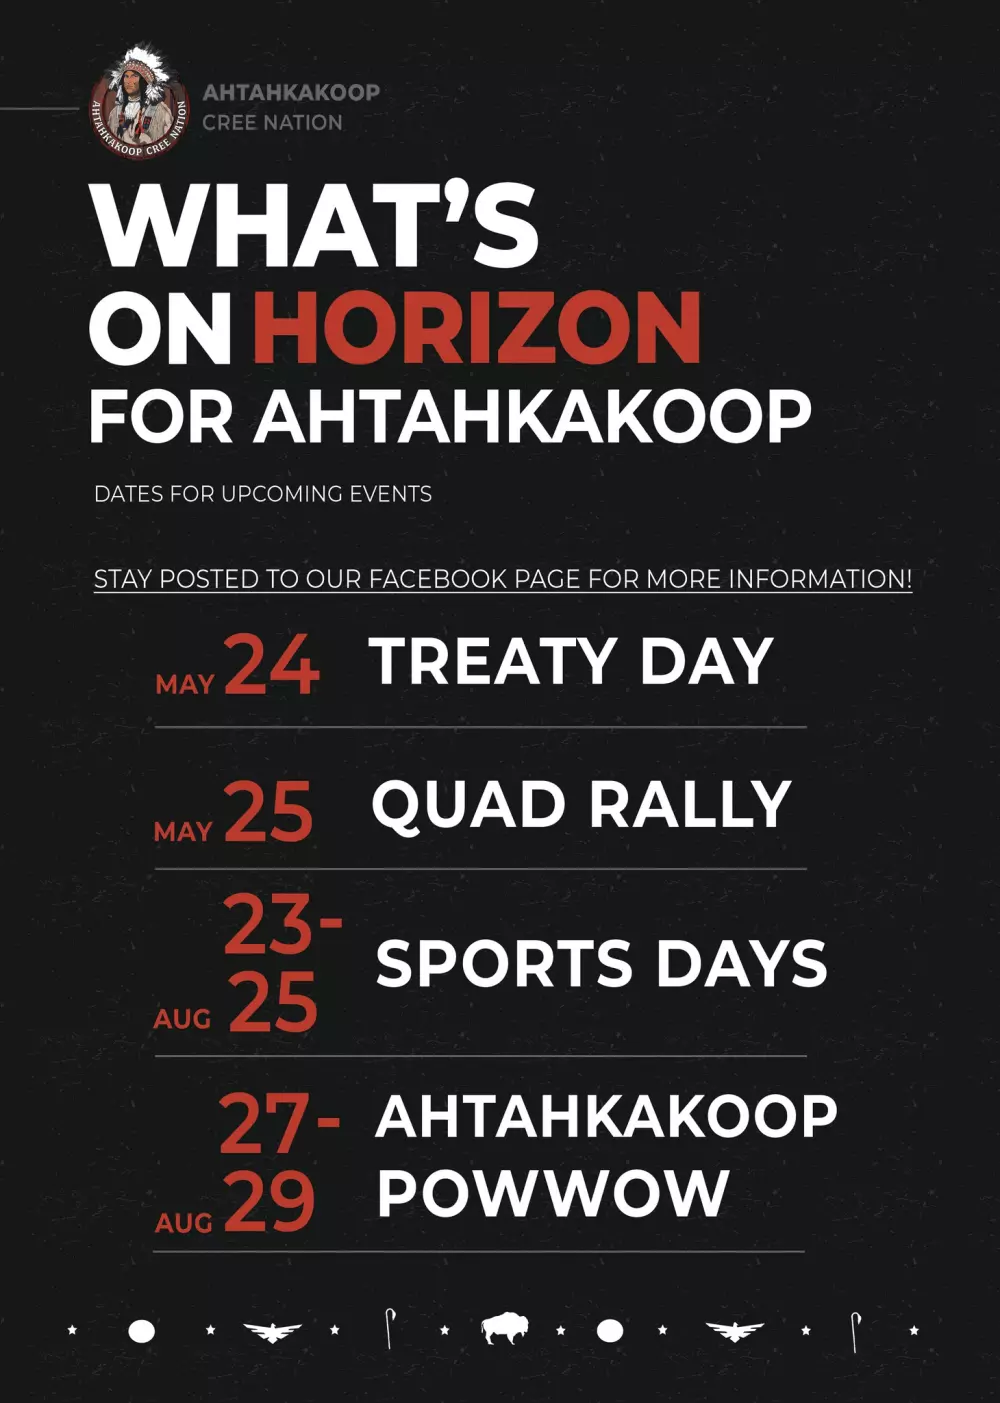 What's on the horizon for Ahtahkakoop